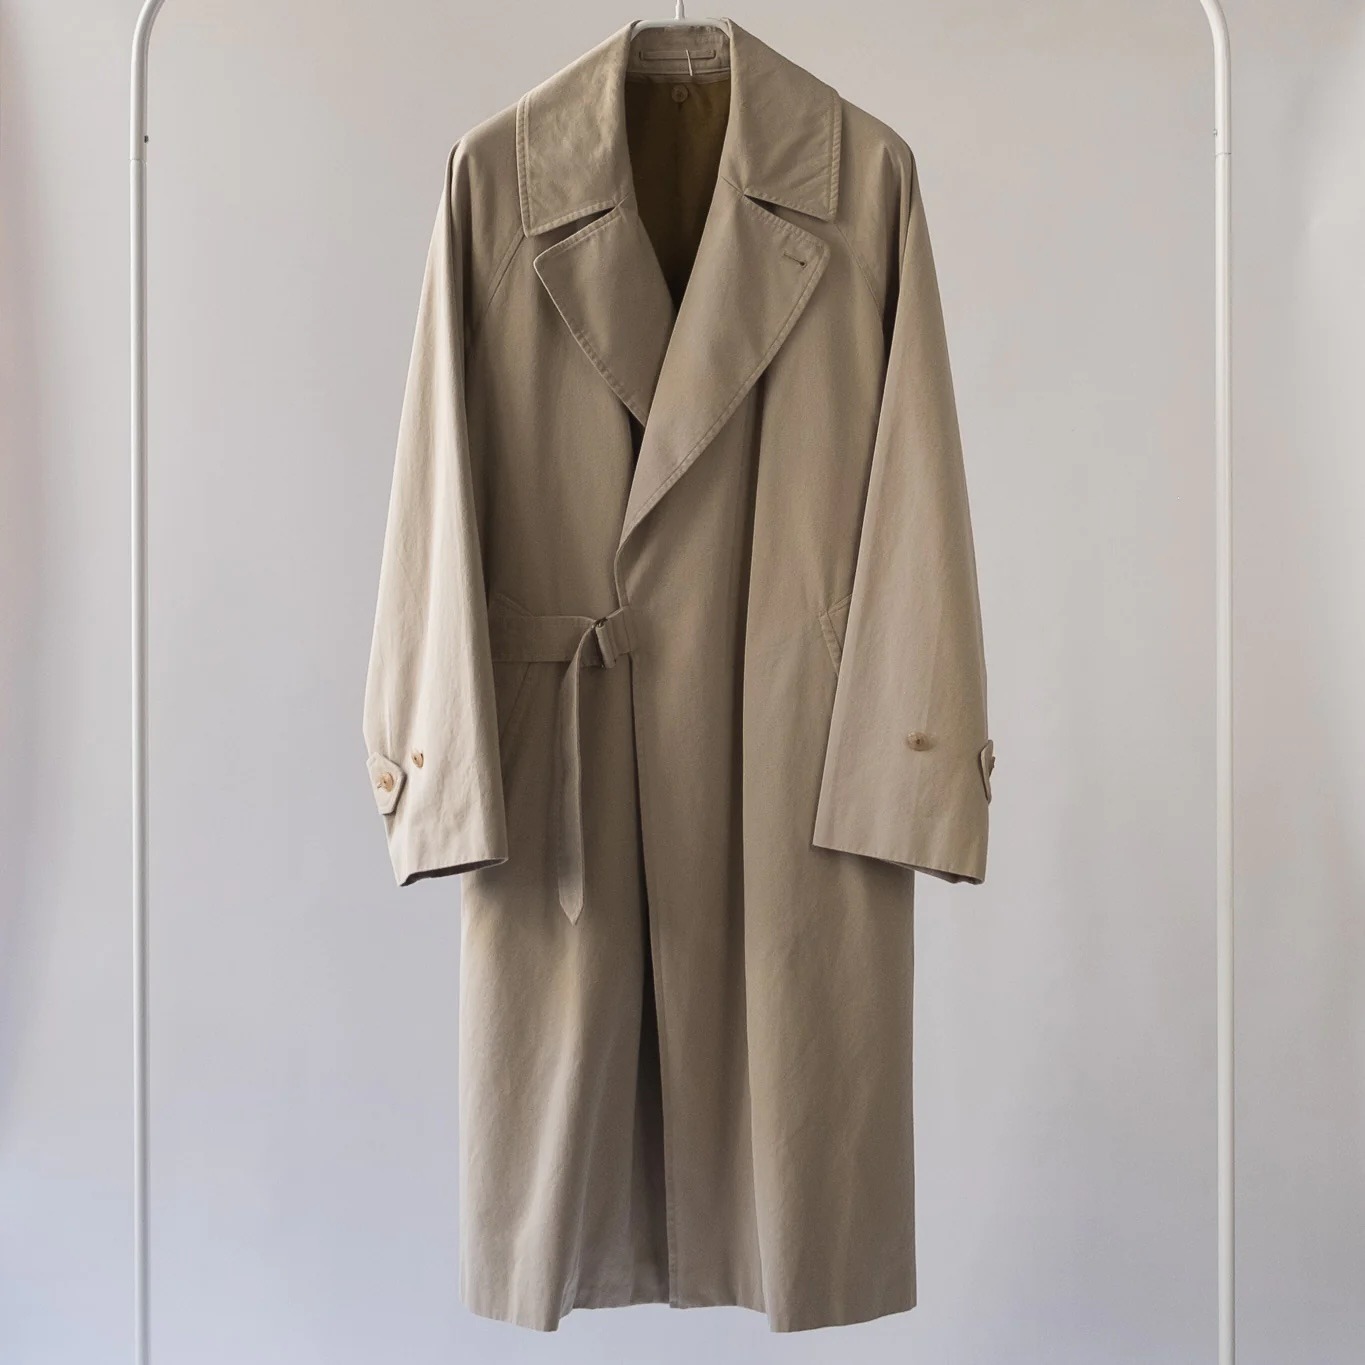 Comoli tielocken coat marque japonaise soldes hiver 2023 homme